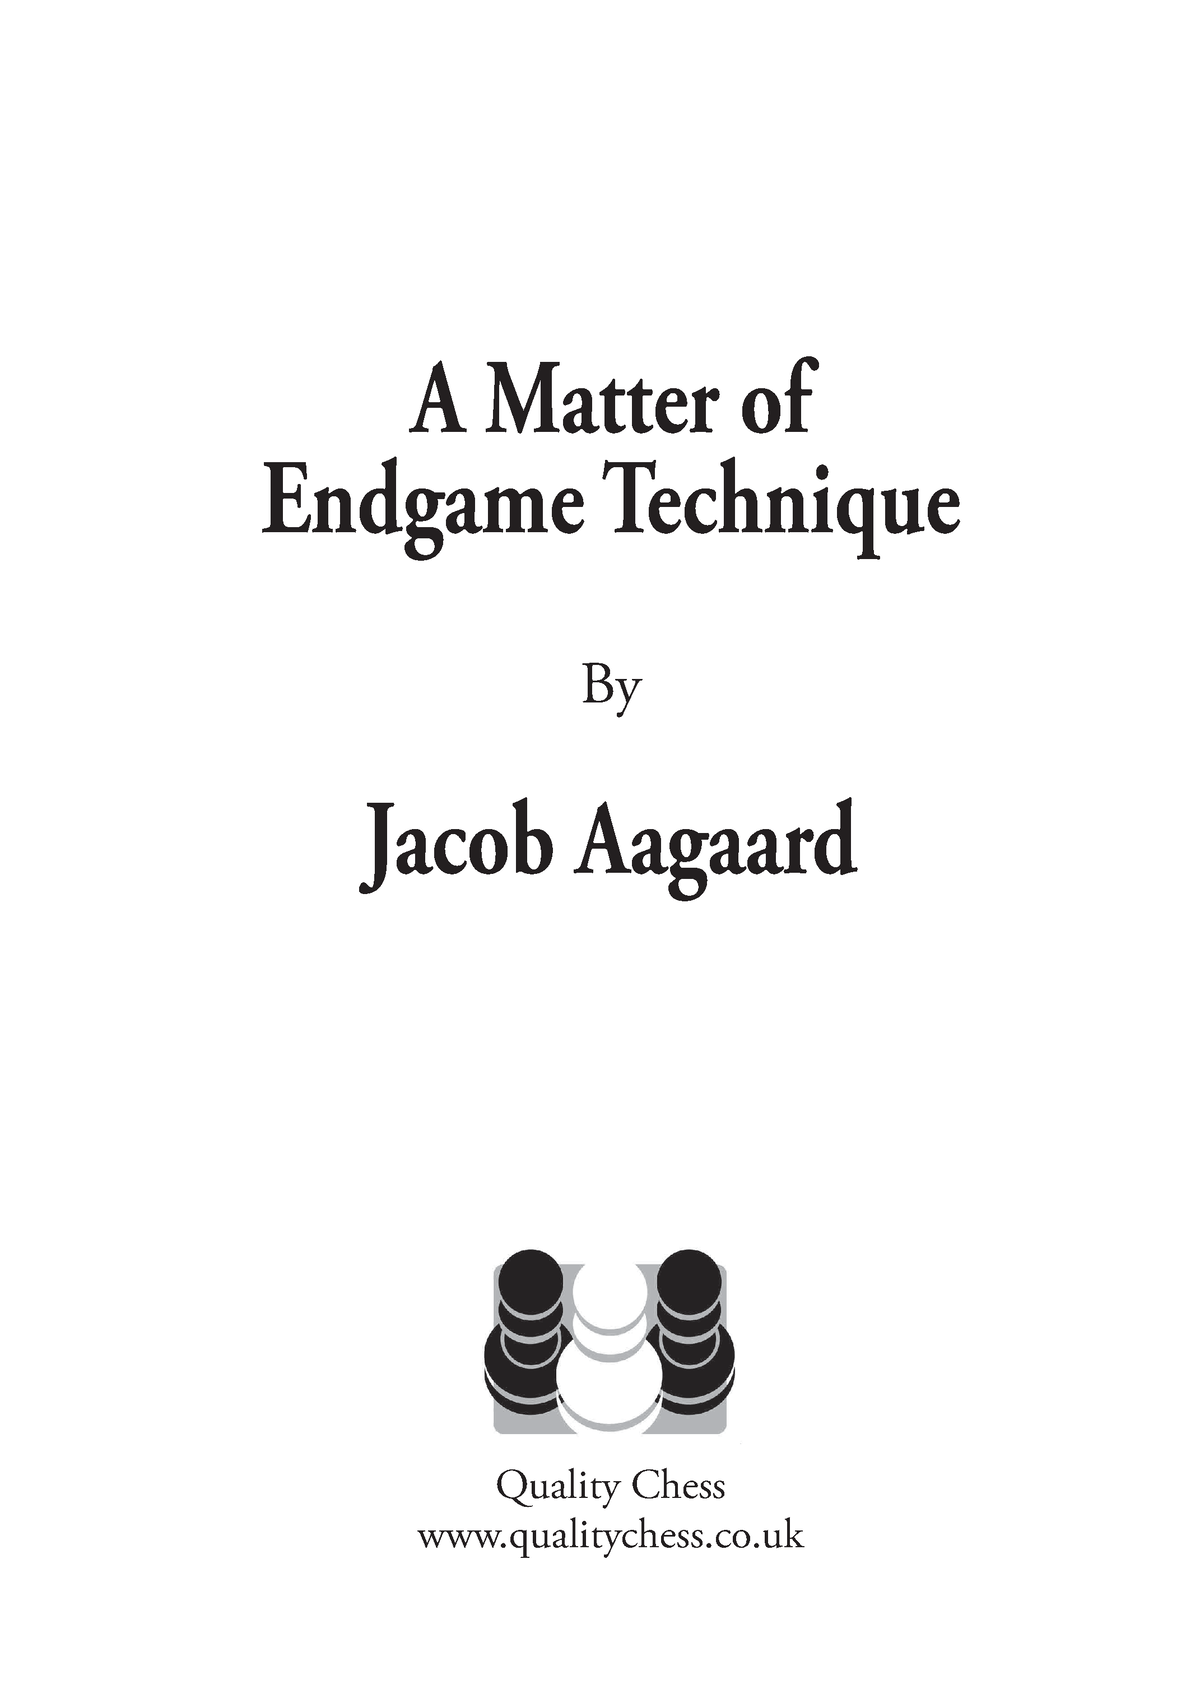 A Matter of endgame technique - Jacob Aagaard